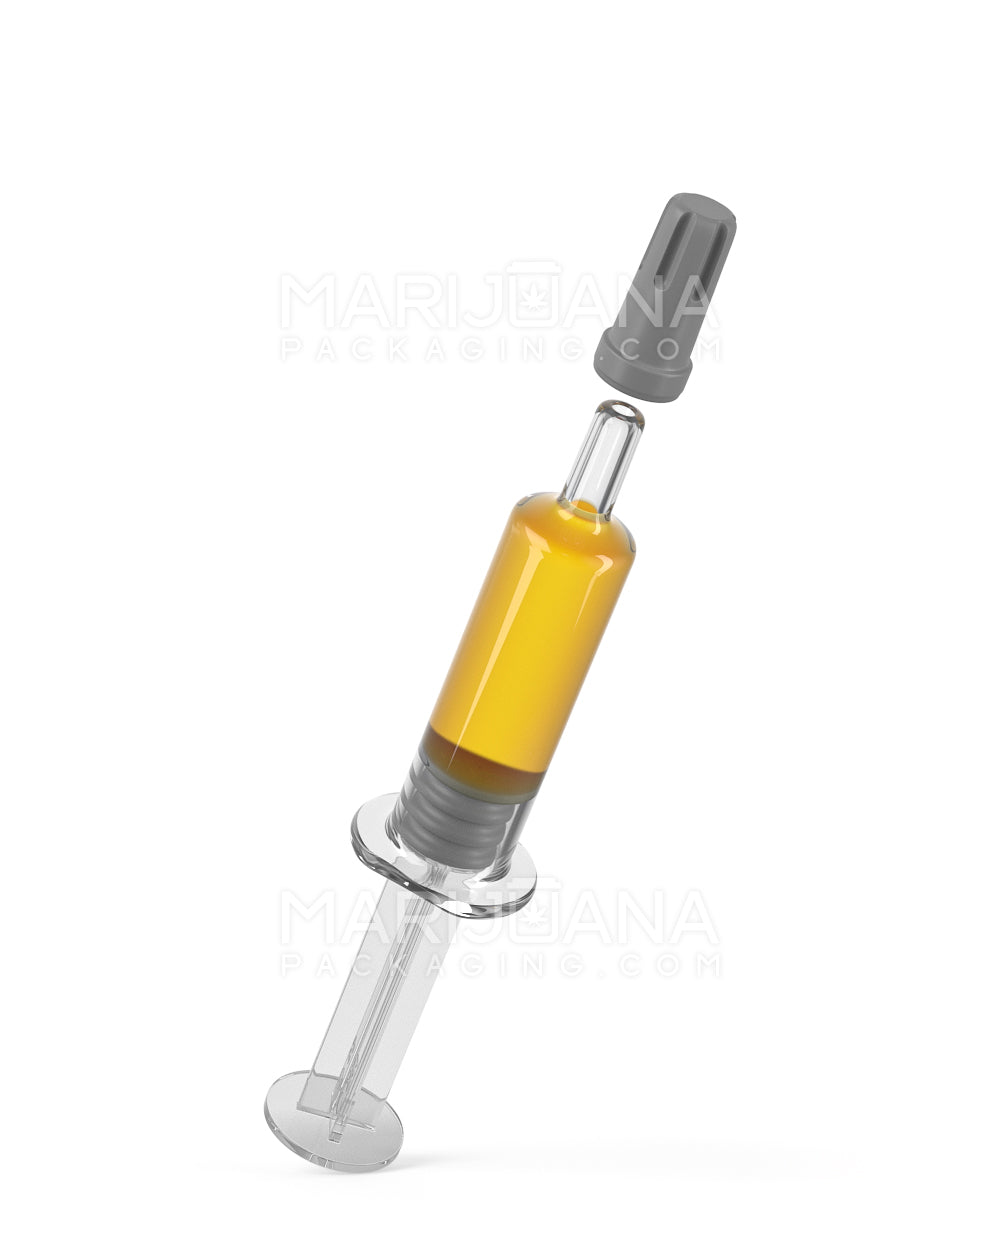 Glass Dab Applicator Syringes | 1mL - No Measurements - 100 Count - 6